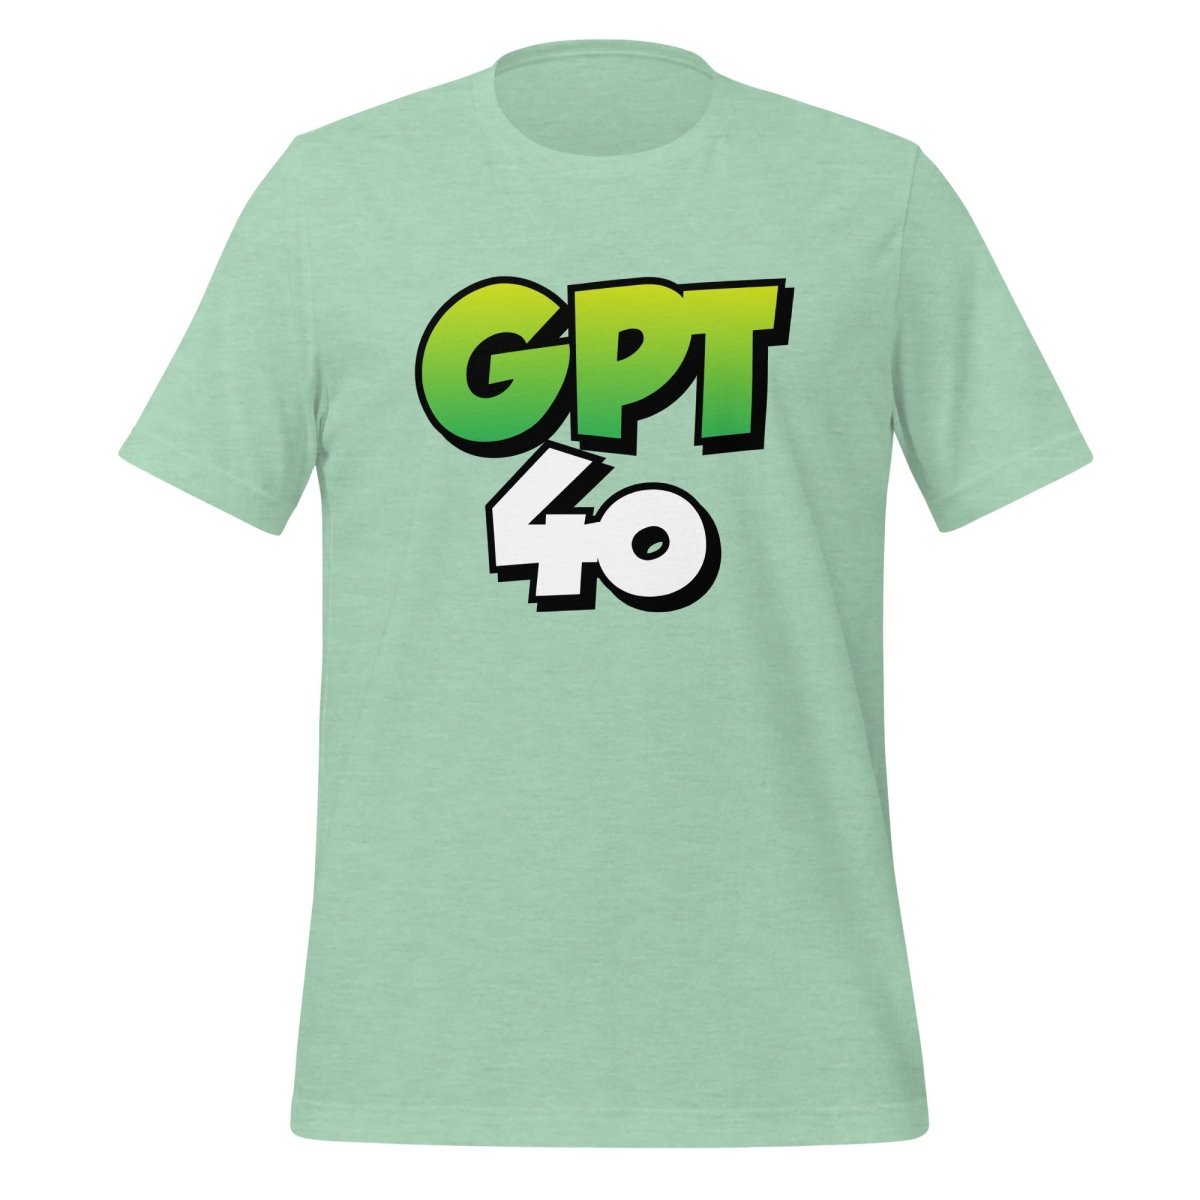 GPT 4o Ben 10 - Style T - Shirt (unisex) - Heather Prism Mint - AI Store